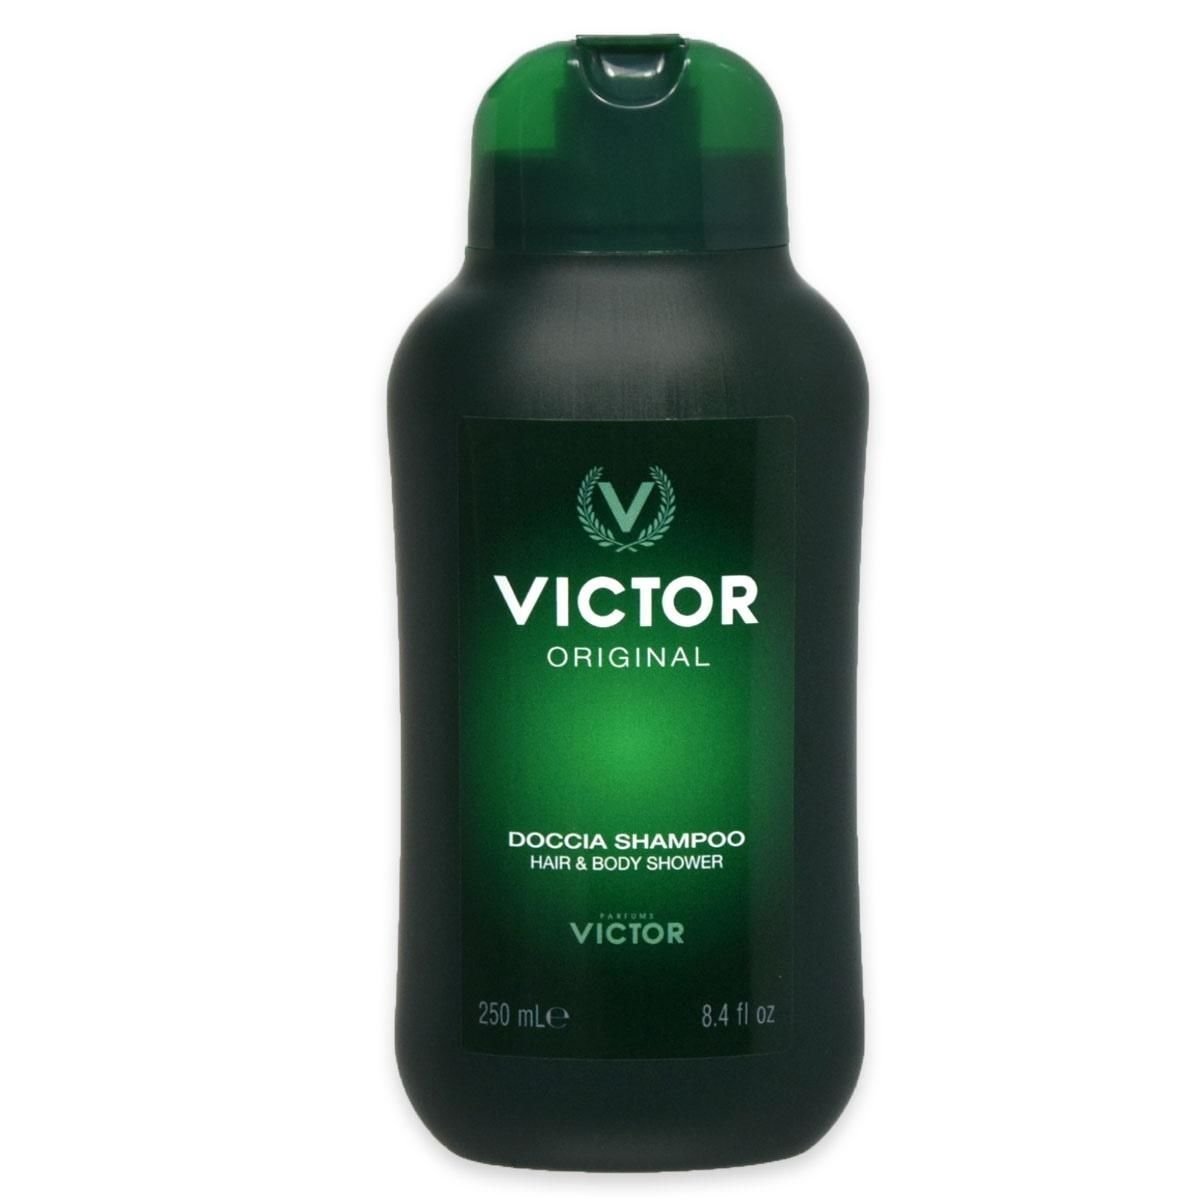 Victor Original Doccia Shampoo Hair & Body Shower 250 Ml